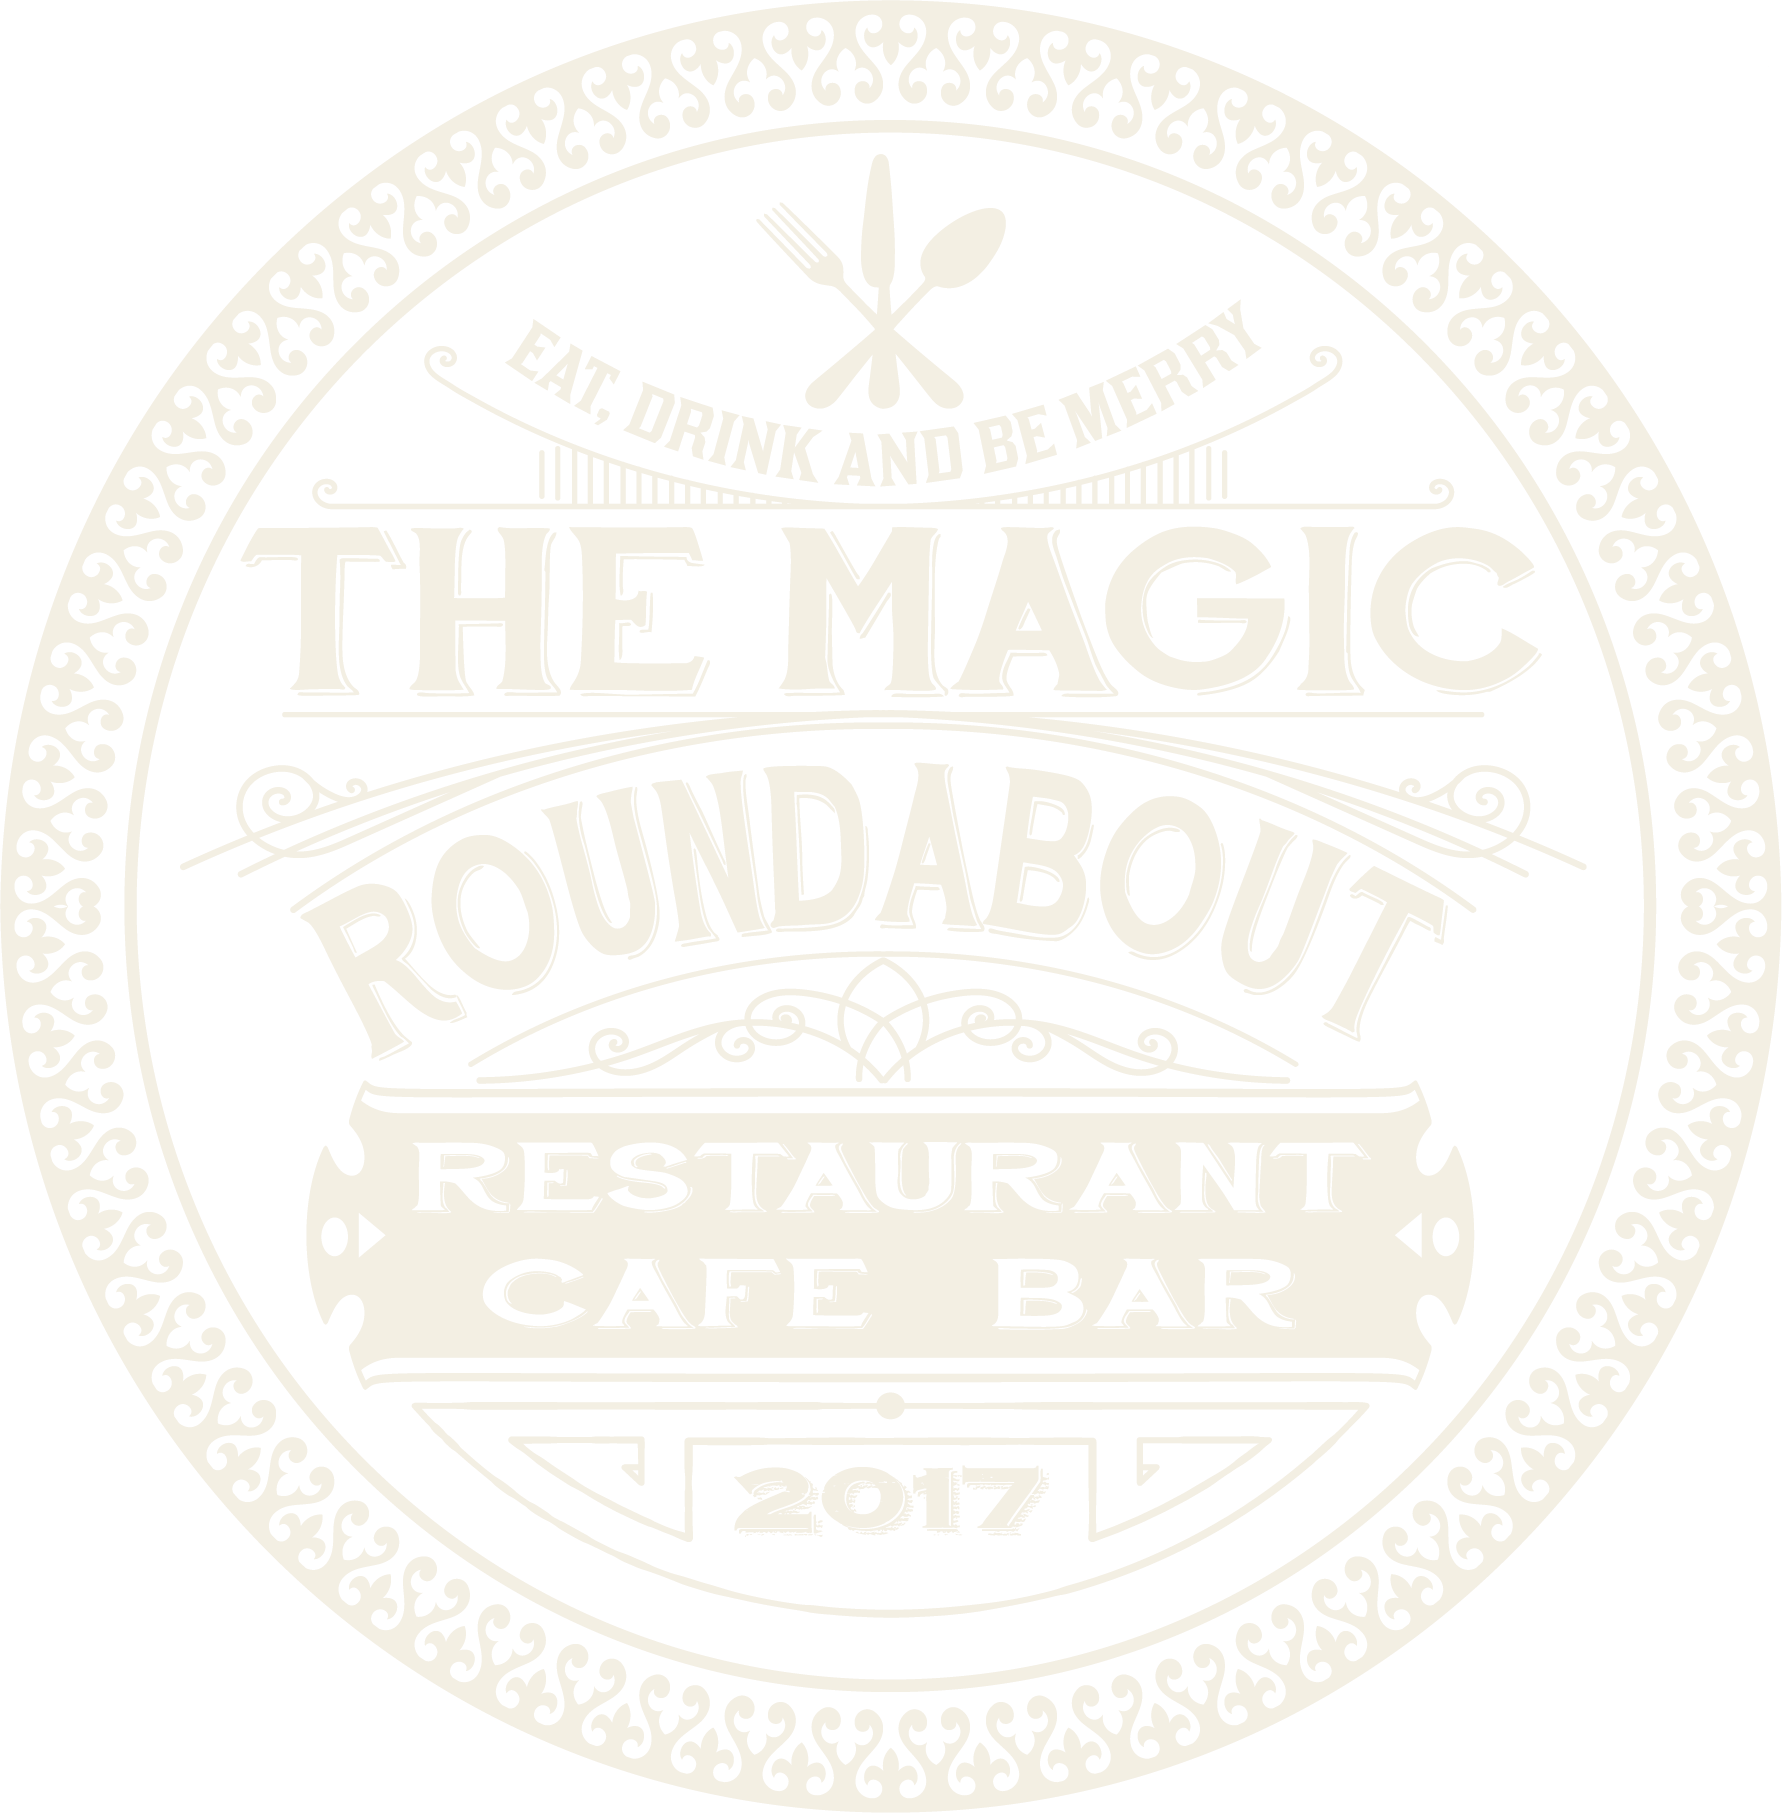 https://images.squarespace-cdn.com/content/v1/63f482fcbd5c4433038f0829/fbeea1a5-3f0e-444a-b5a0-144534386f73/The-Magic-Roundabout-Logo-Cream.png